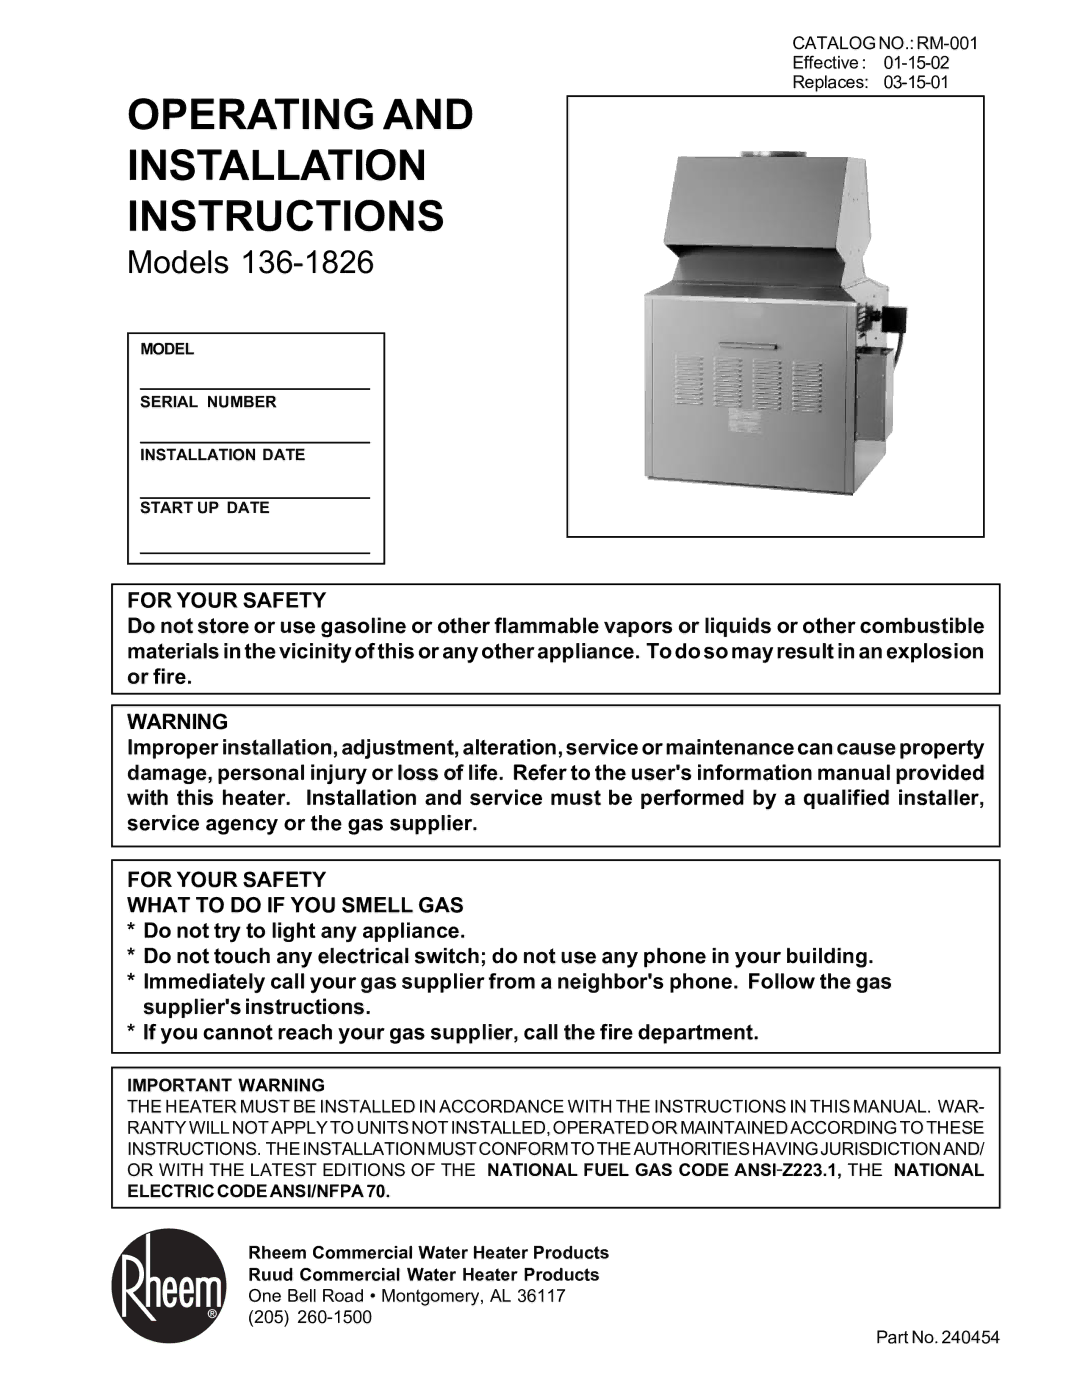 Rheem 136-1826 installation instructions Catalog NO. RM-001, Important Warning, Electric Code ANSI/NFPA 